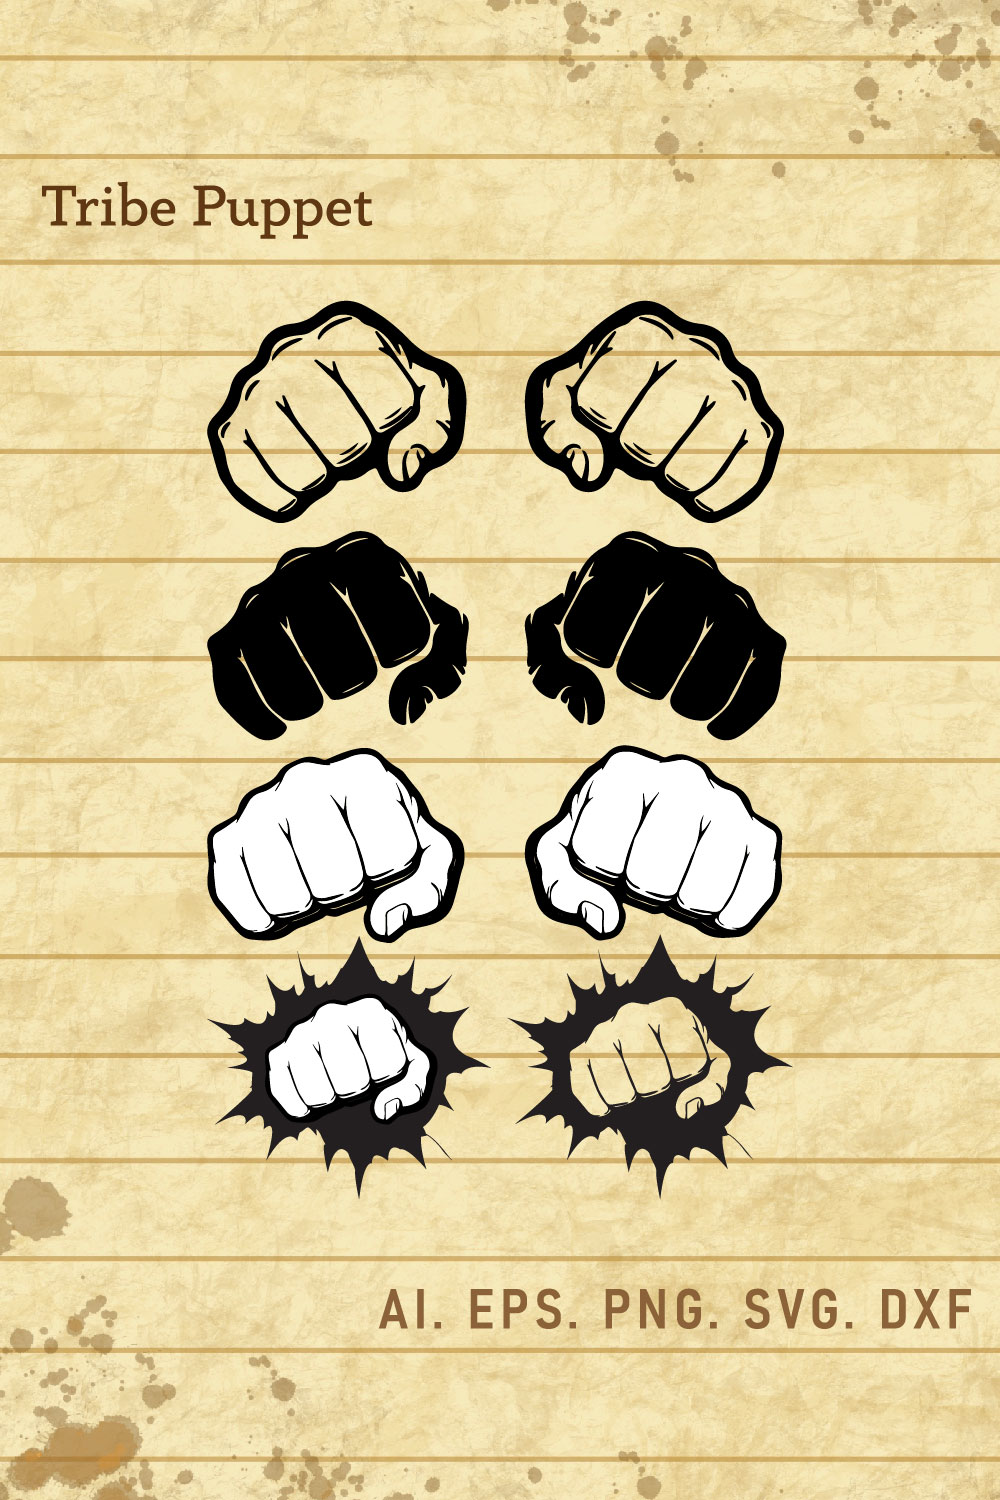 Boxing Fist vector Set pinterest preview image.